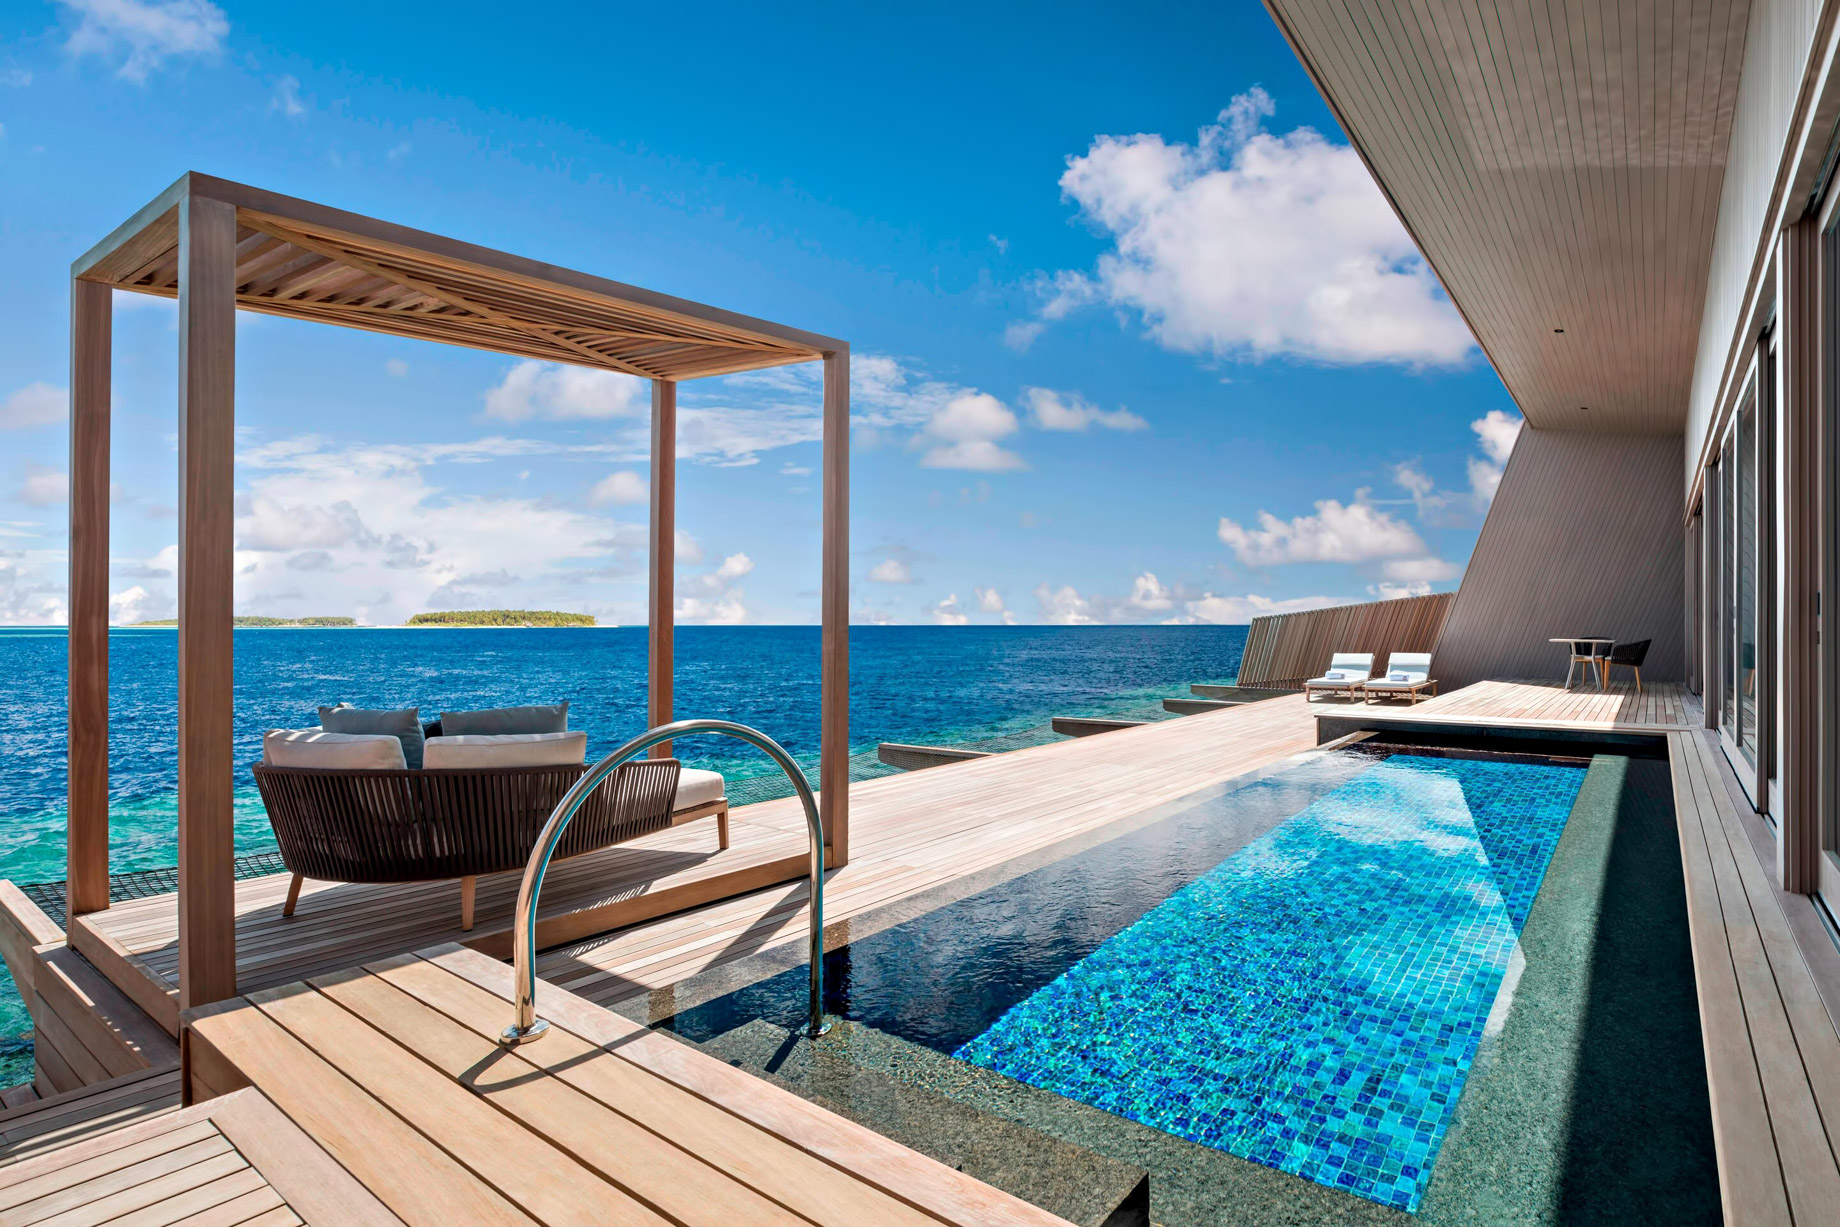 The St. Regis Maldives Vommuli Resort – Dhaalu Atoll, Maldives – St. Regis Overwater Suite Terrace